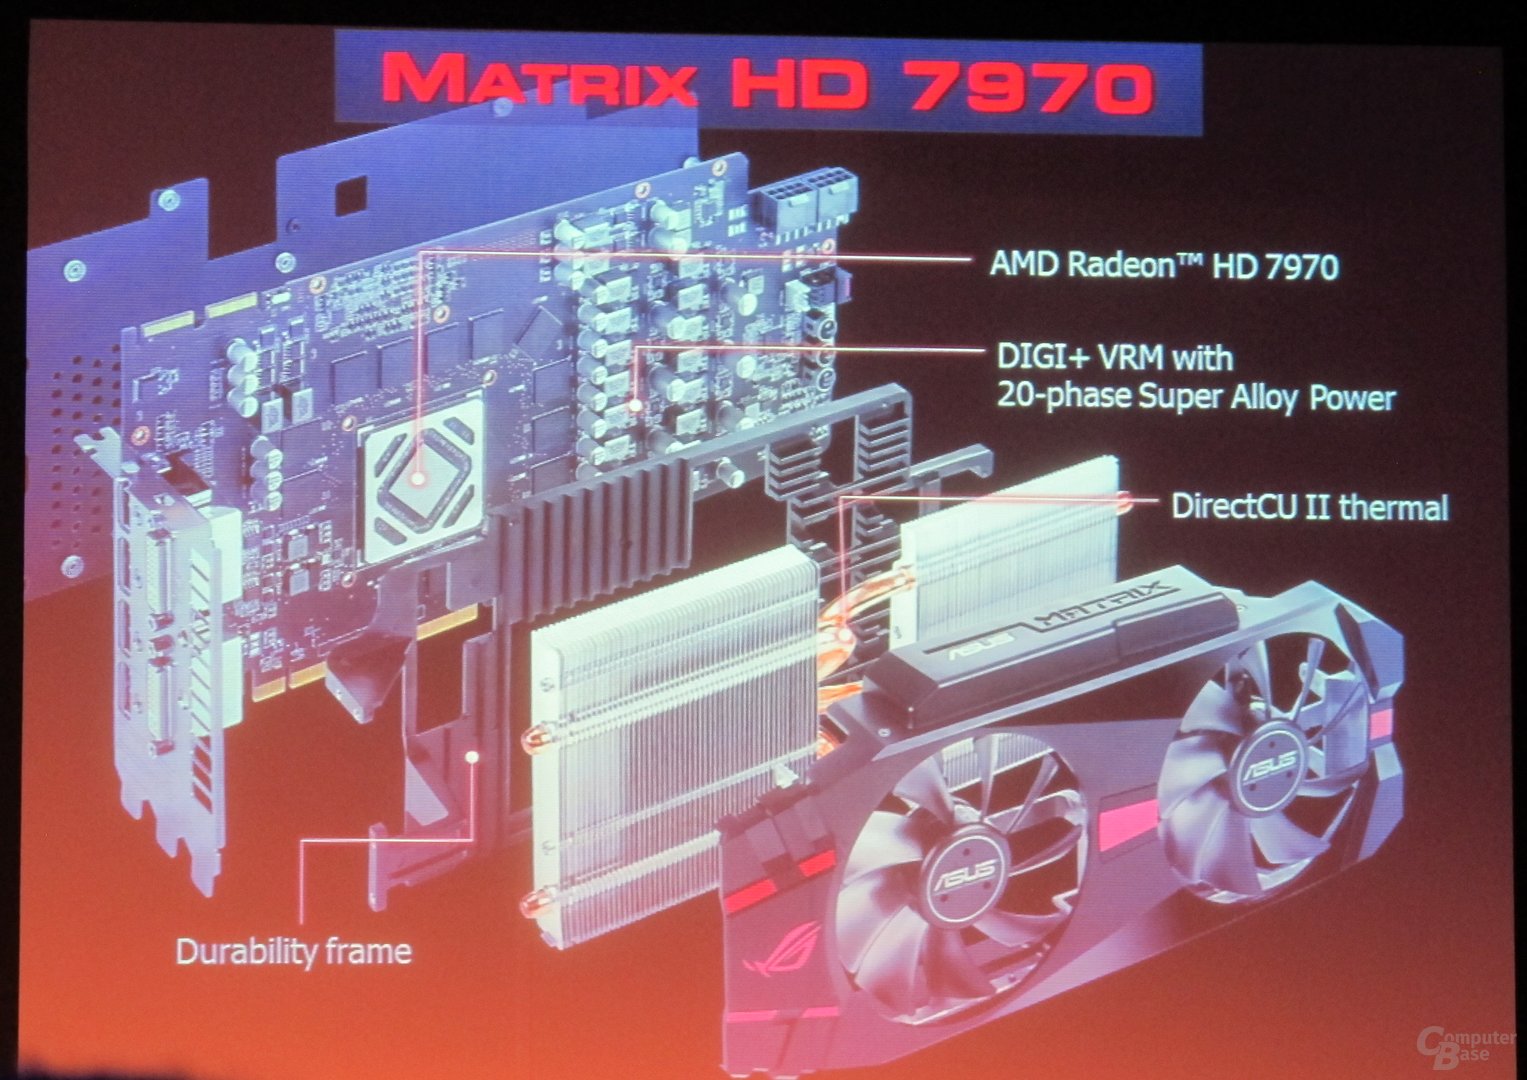 Asus ROG Matrix Radeon HD 7970